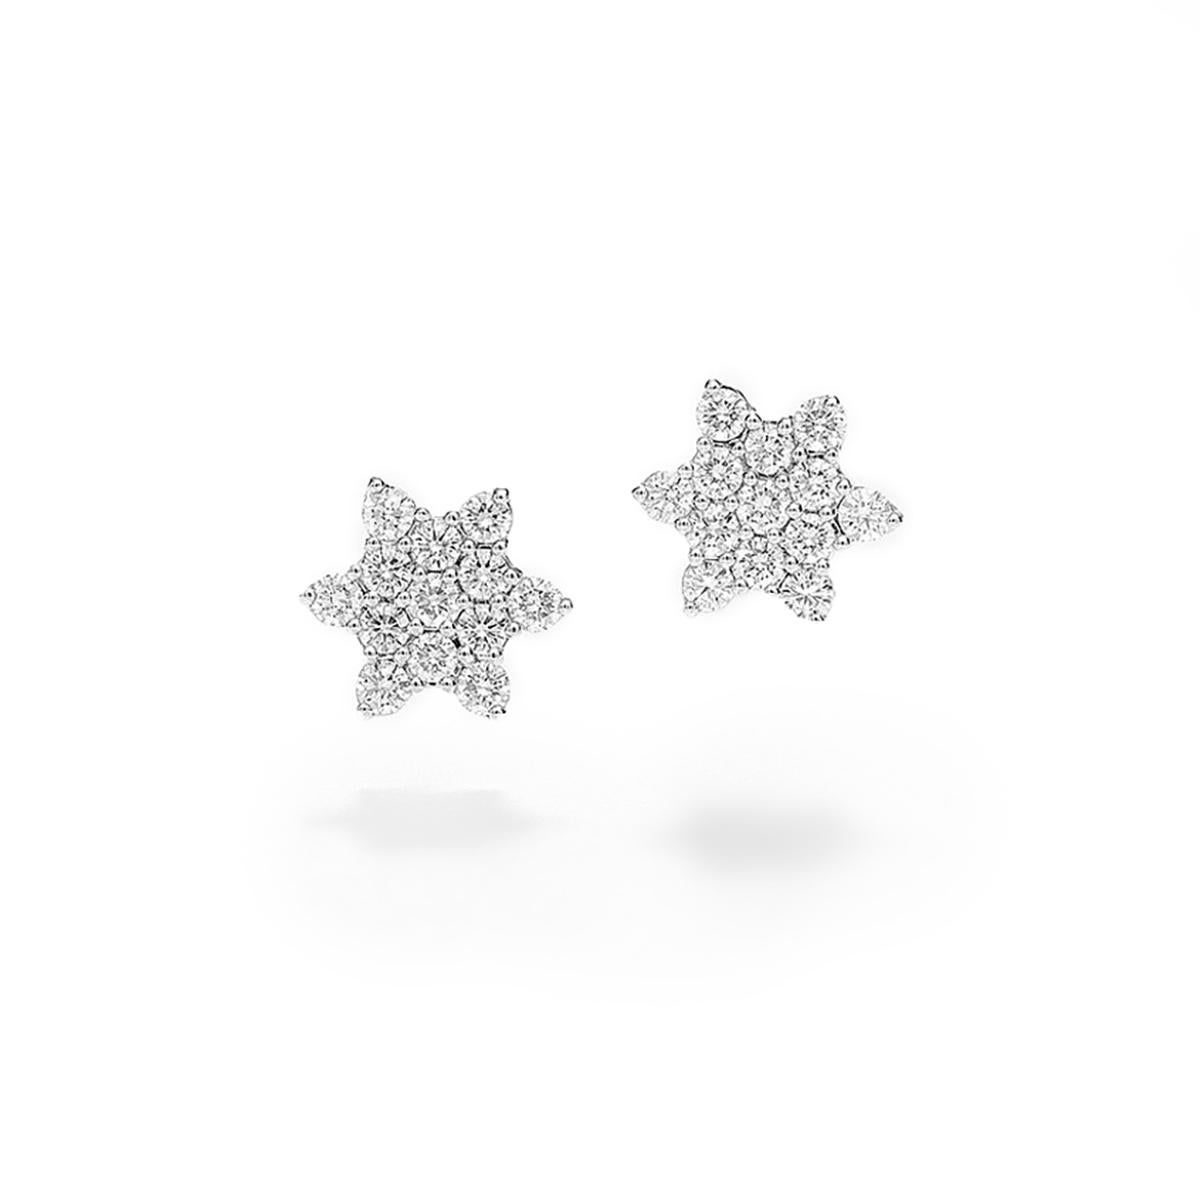 star earrings with diamonds